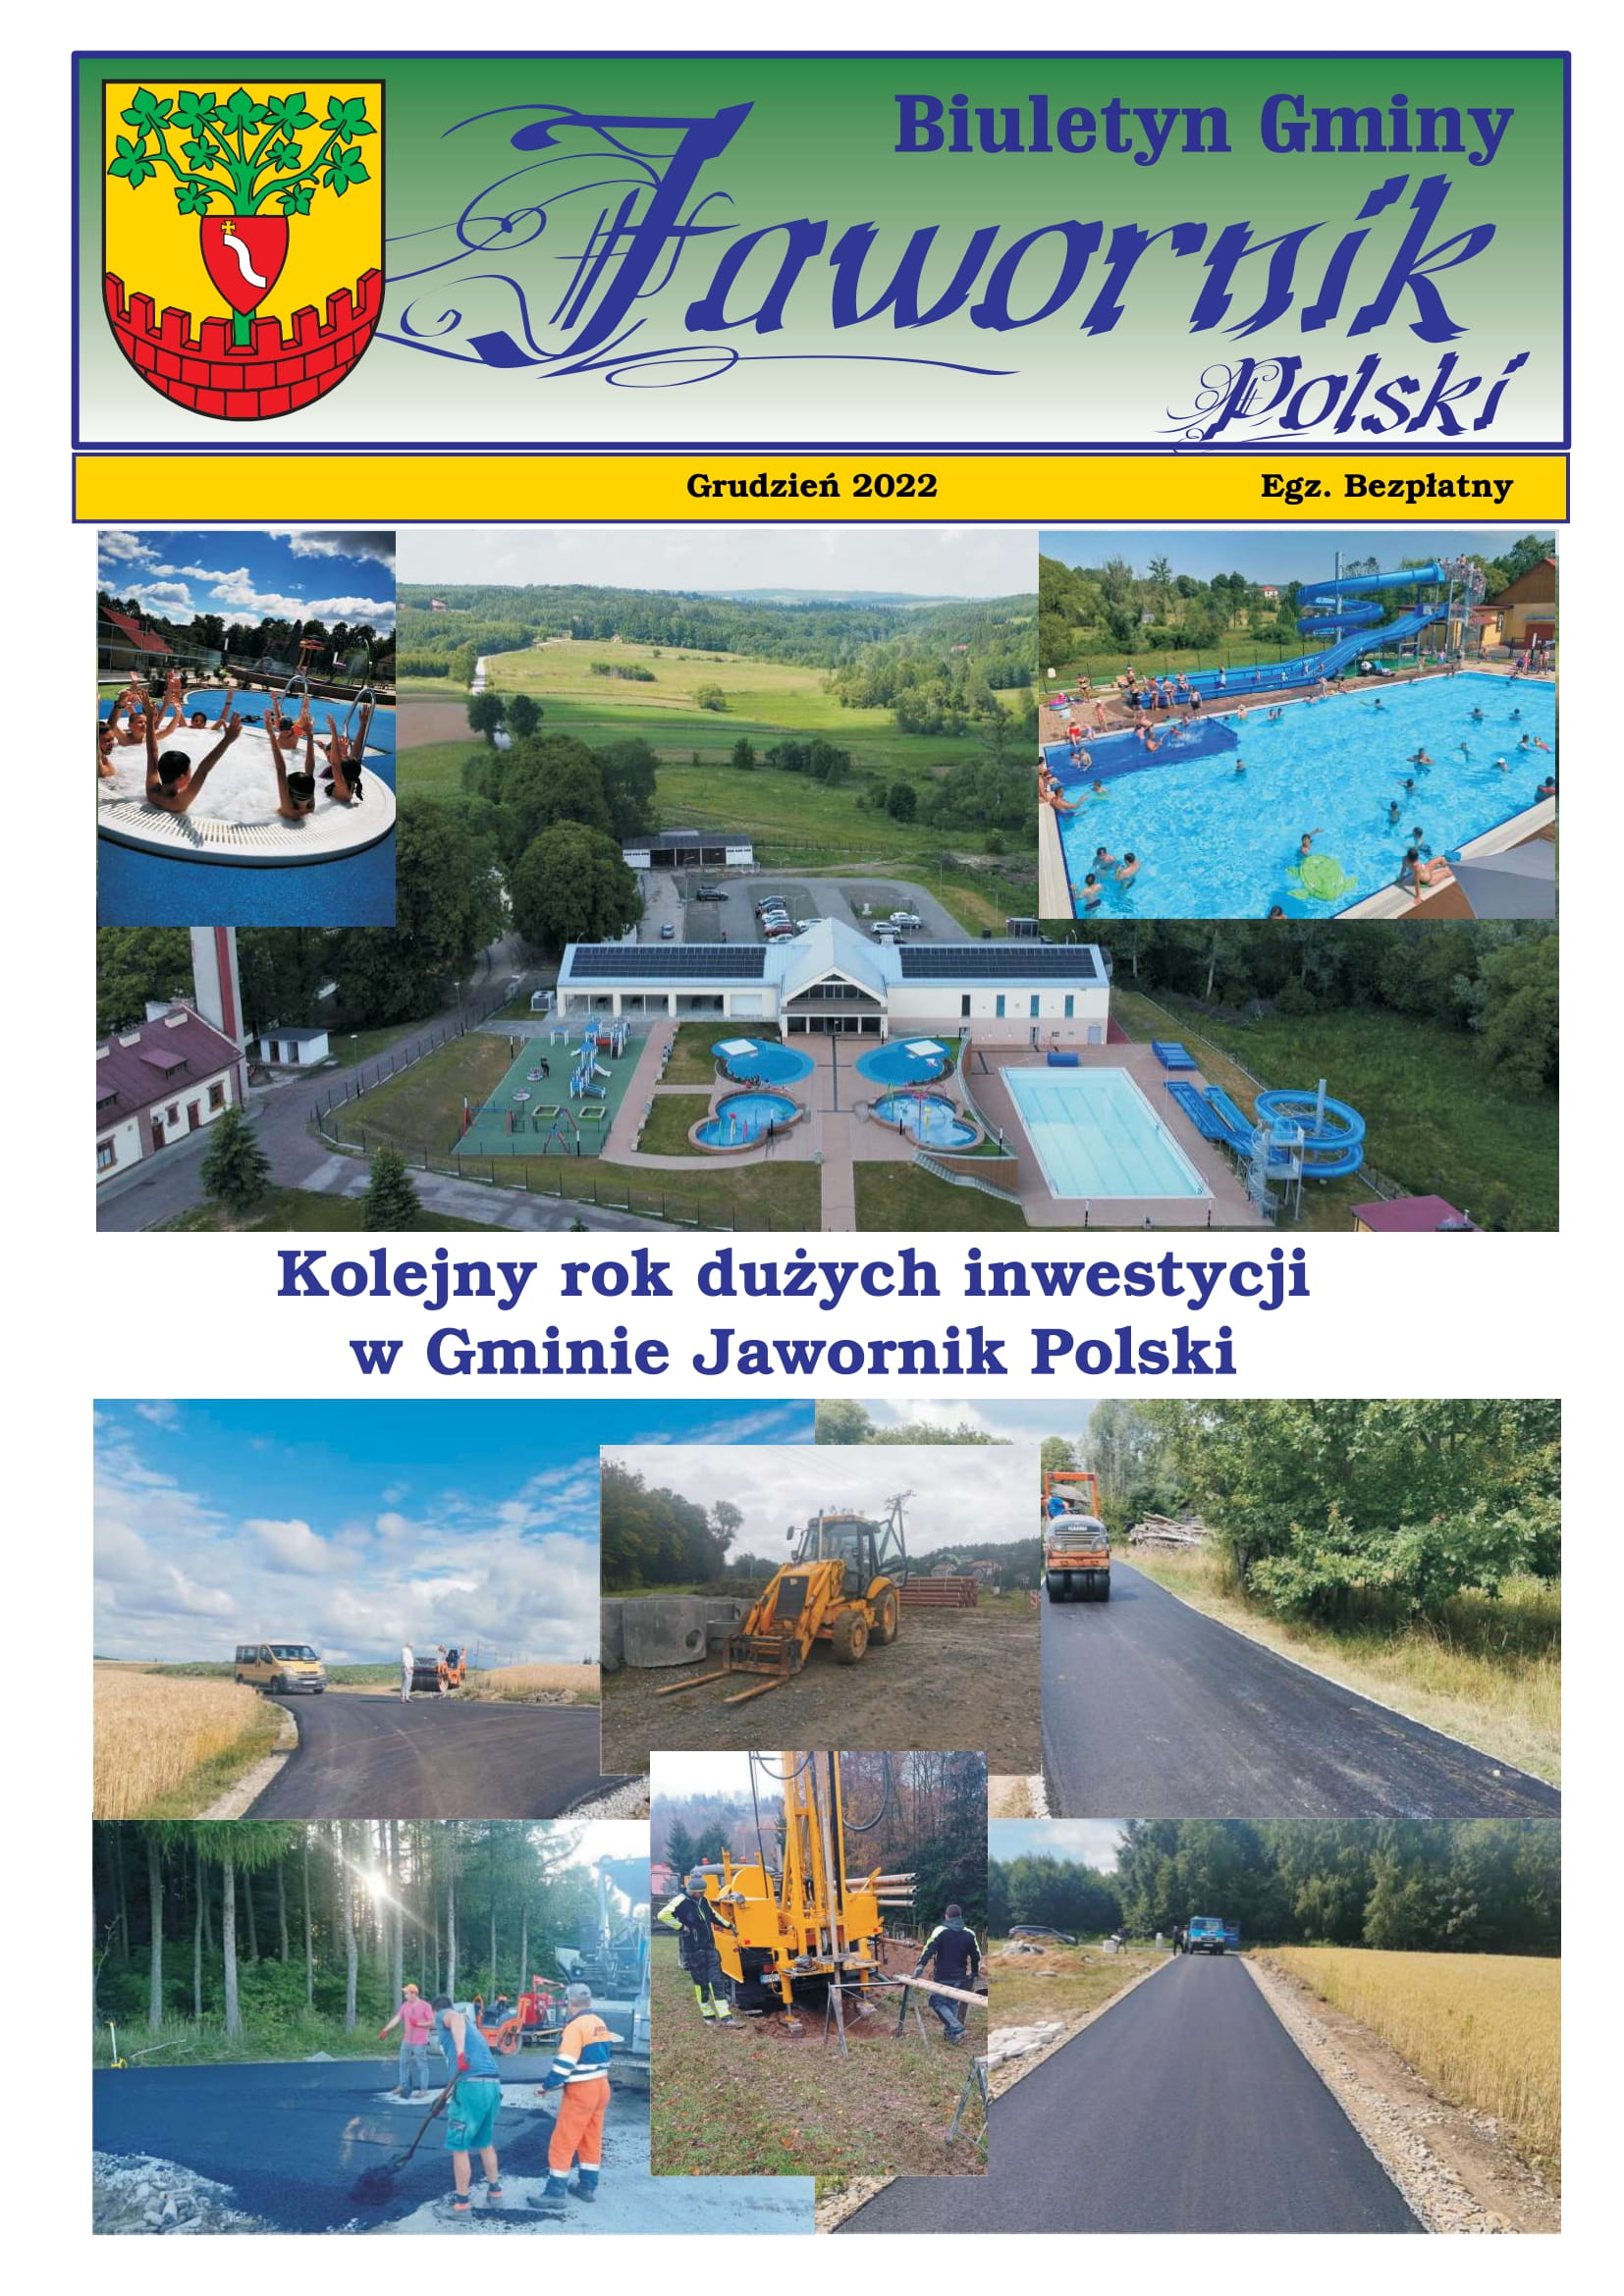 Read more about the article Biuletyn Gminy Jawornik Polski 2022